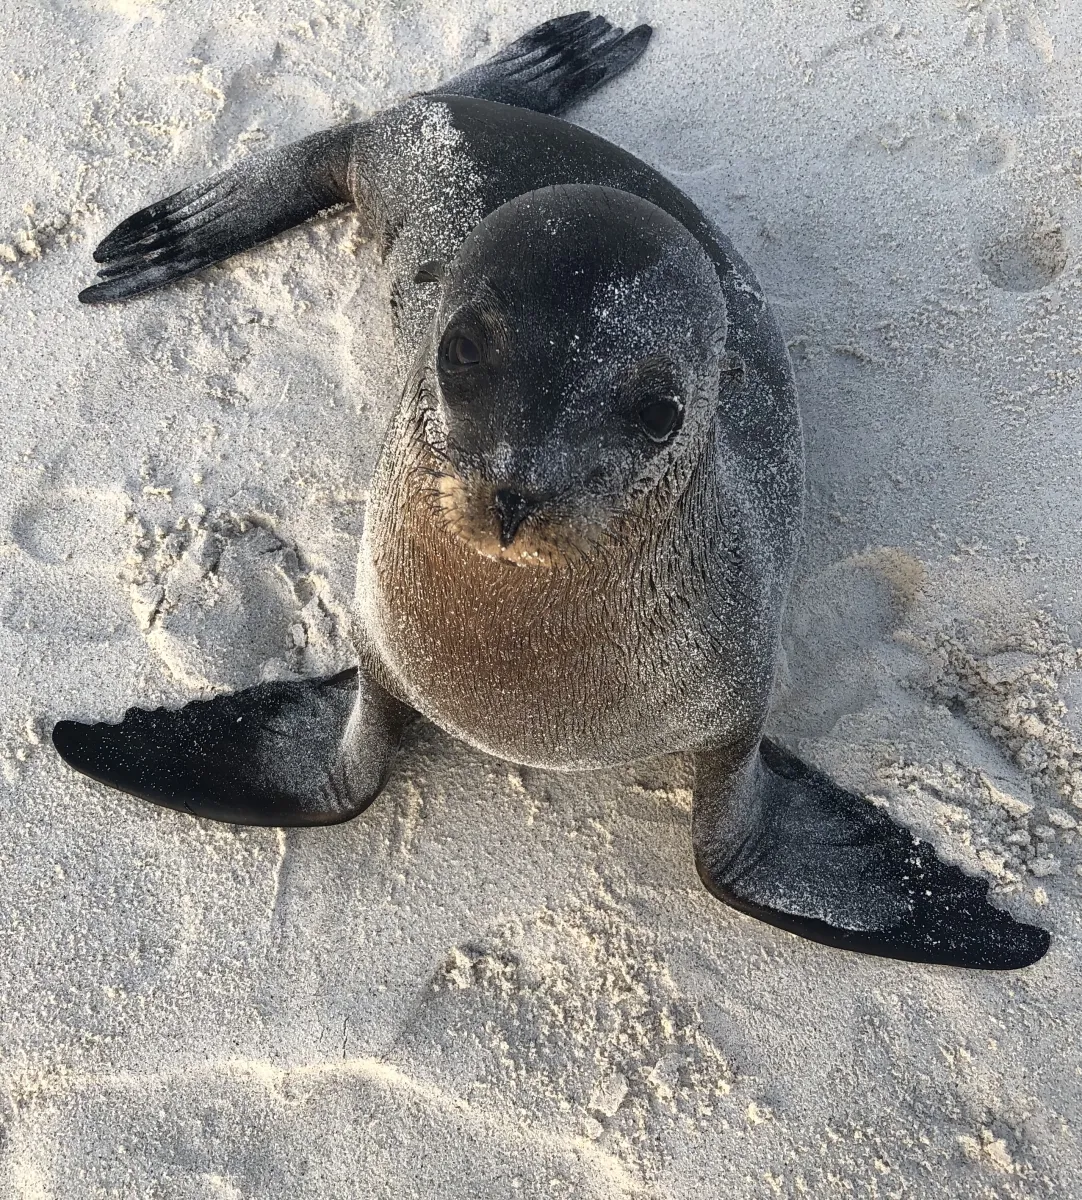 A seal looking up at the camera